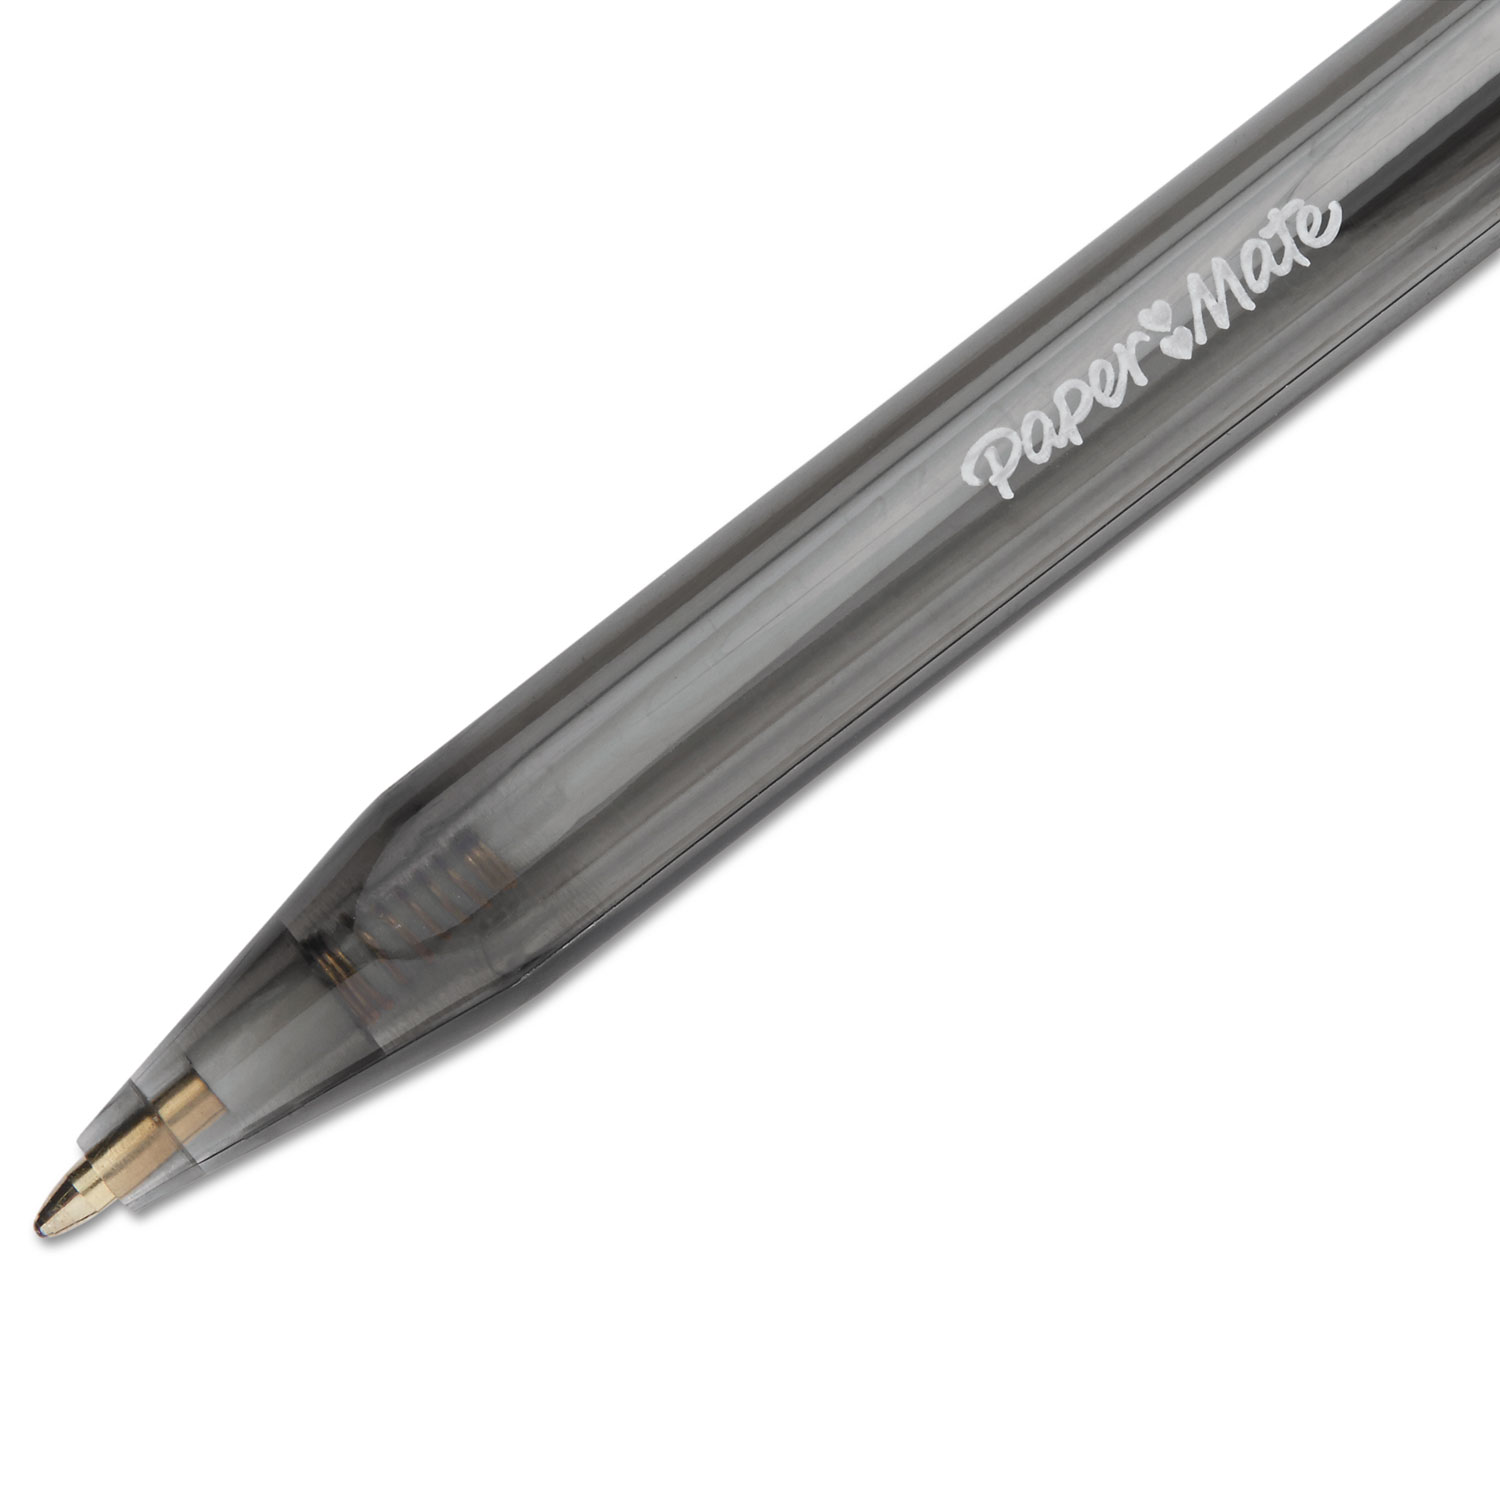 City Market - Paper Mate® InkJoy® Medium Point Gel Pens, 6 pk